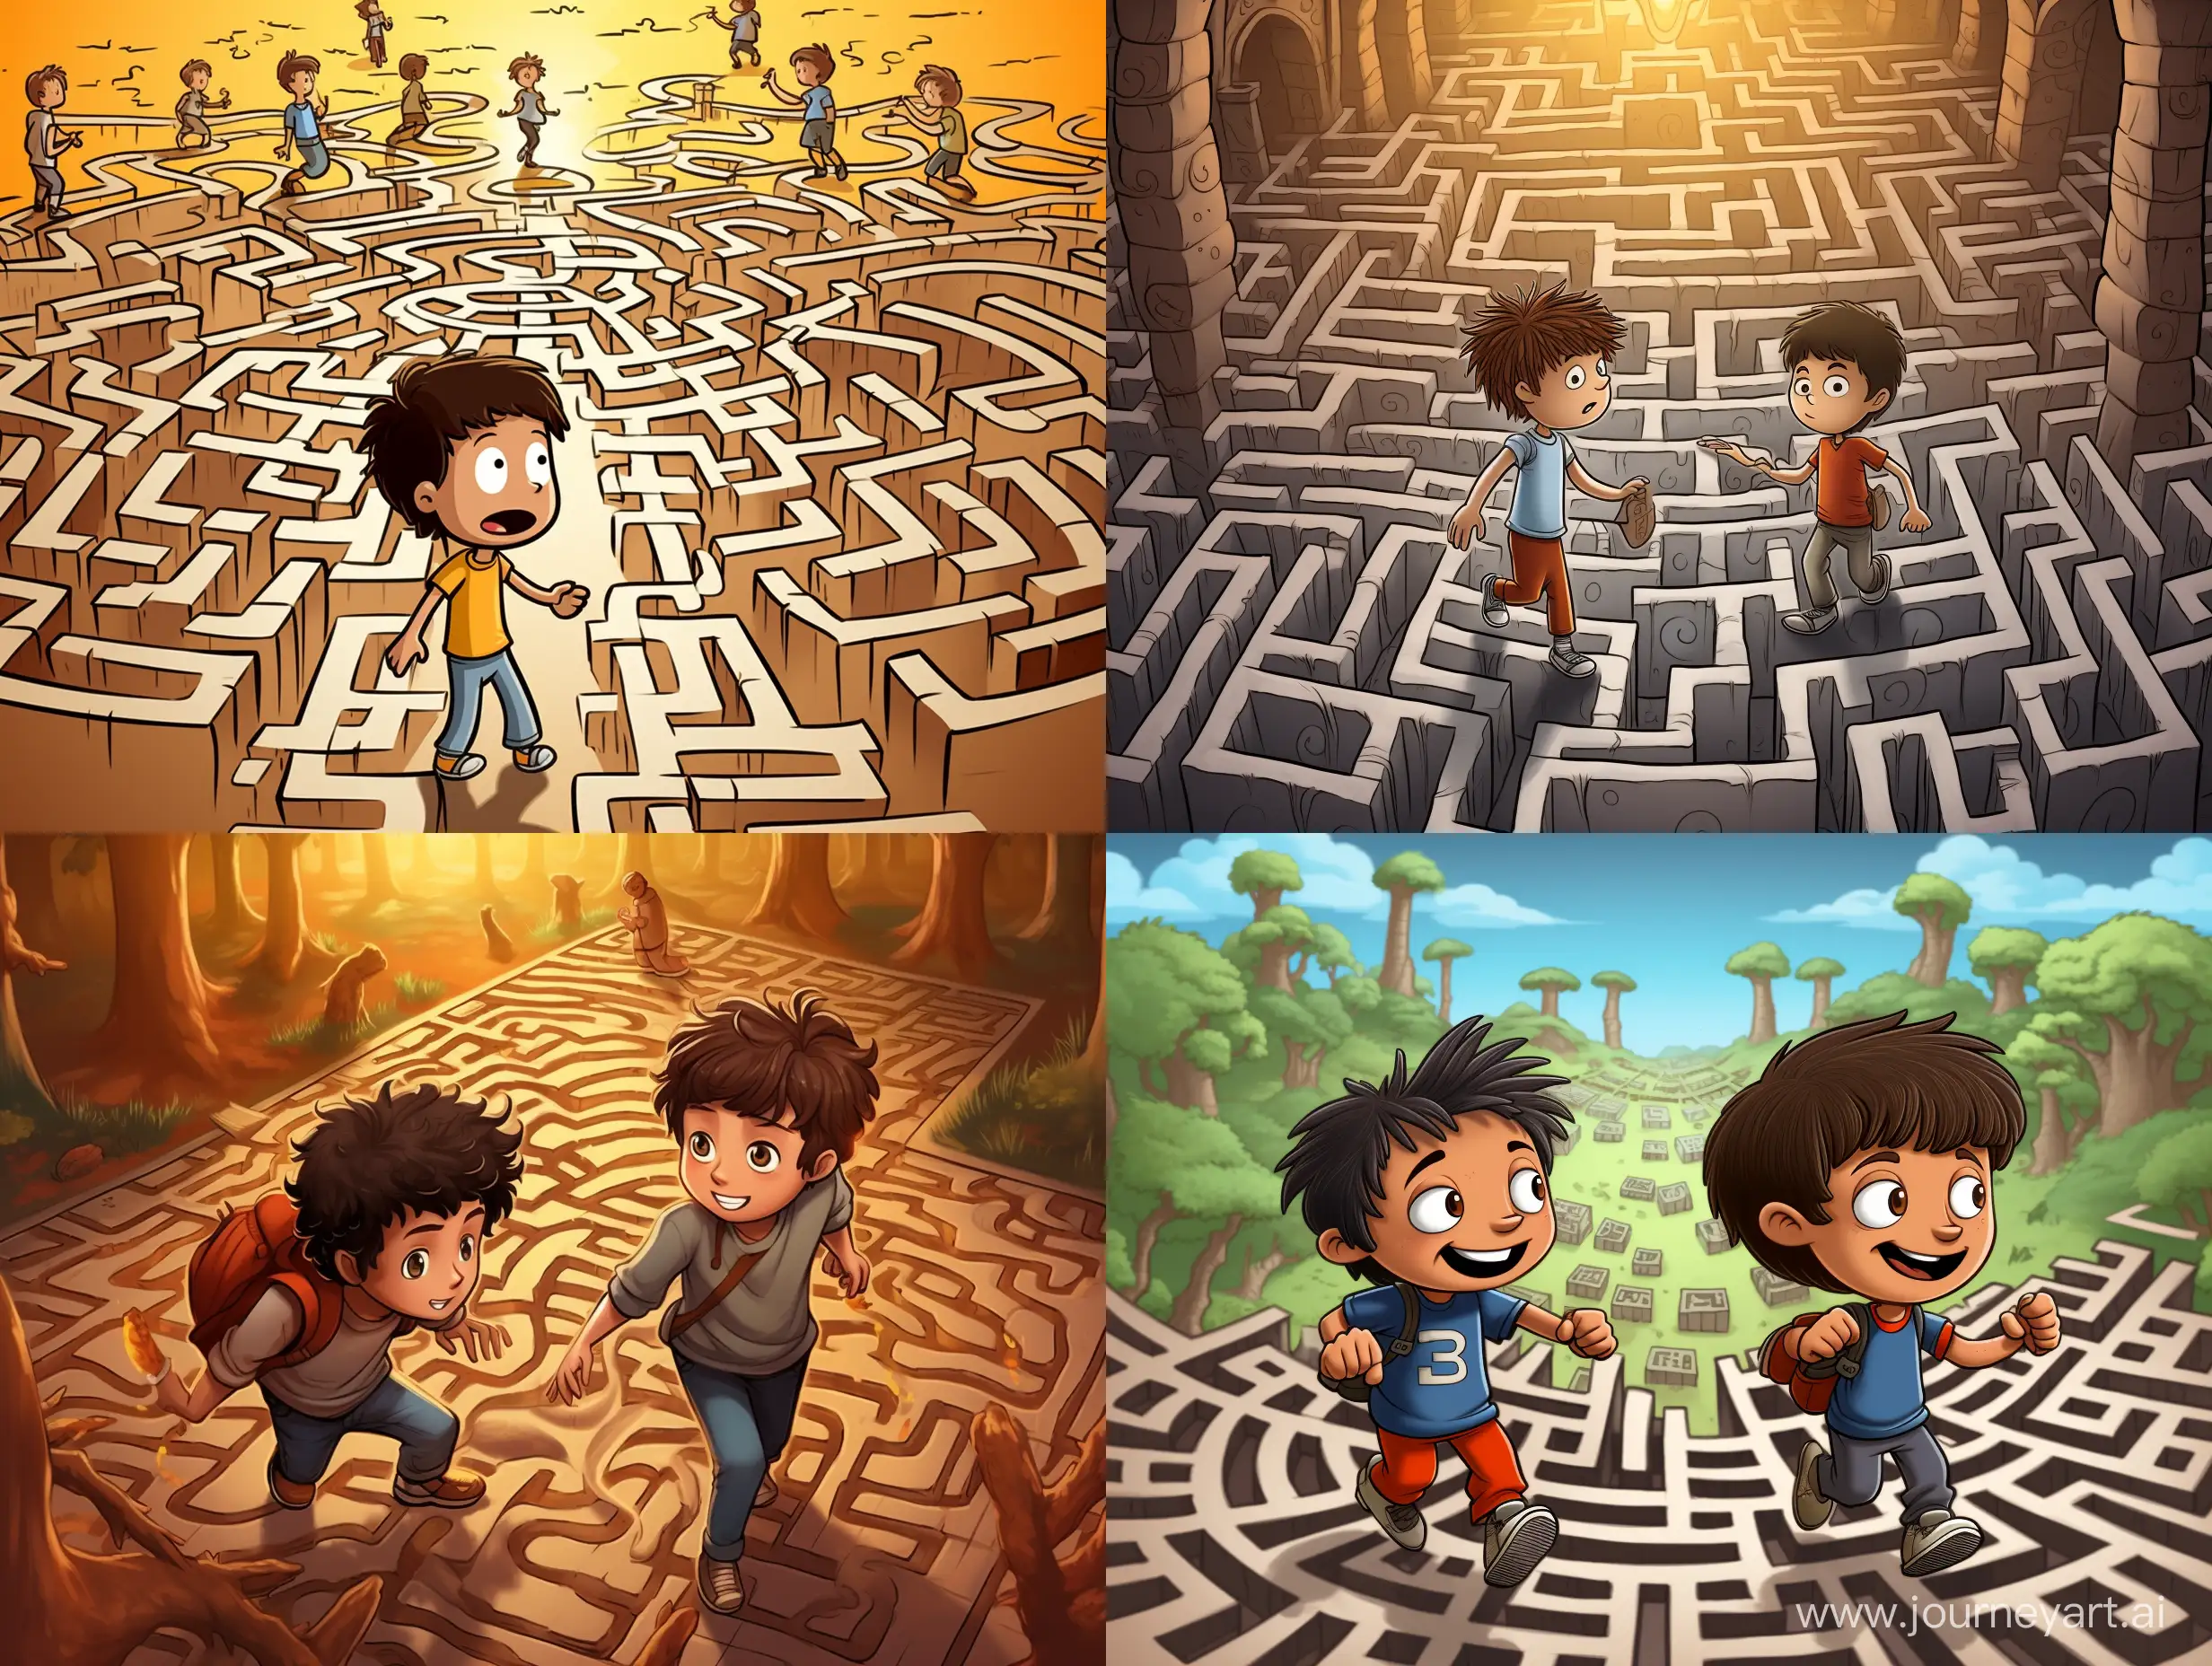 Maze-Exploration-Cartoon-Style-New-Year-Adventure-with-Symbolic-Metaphors